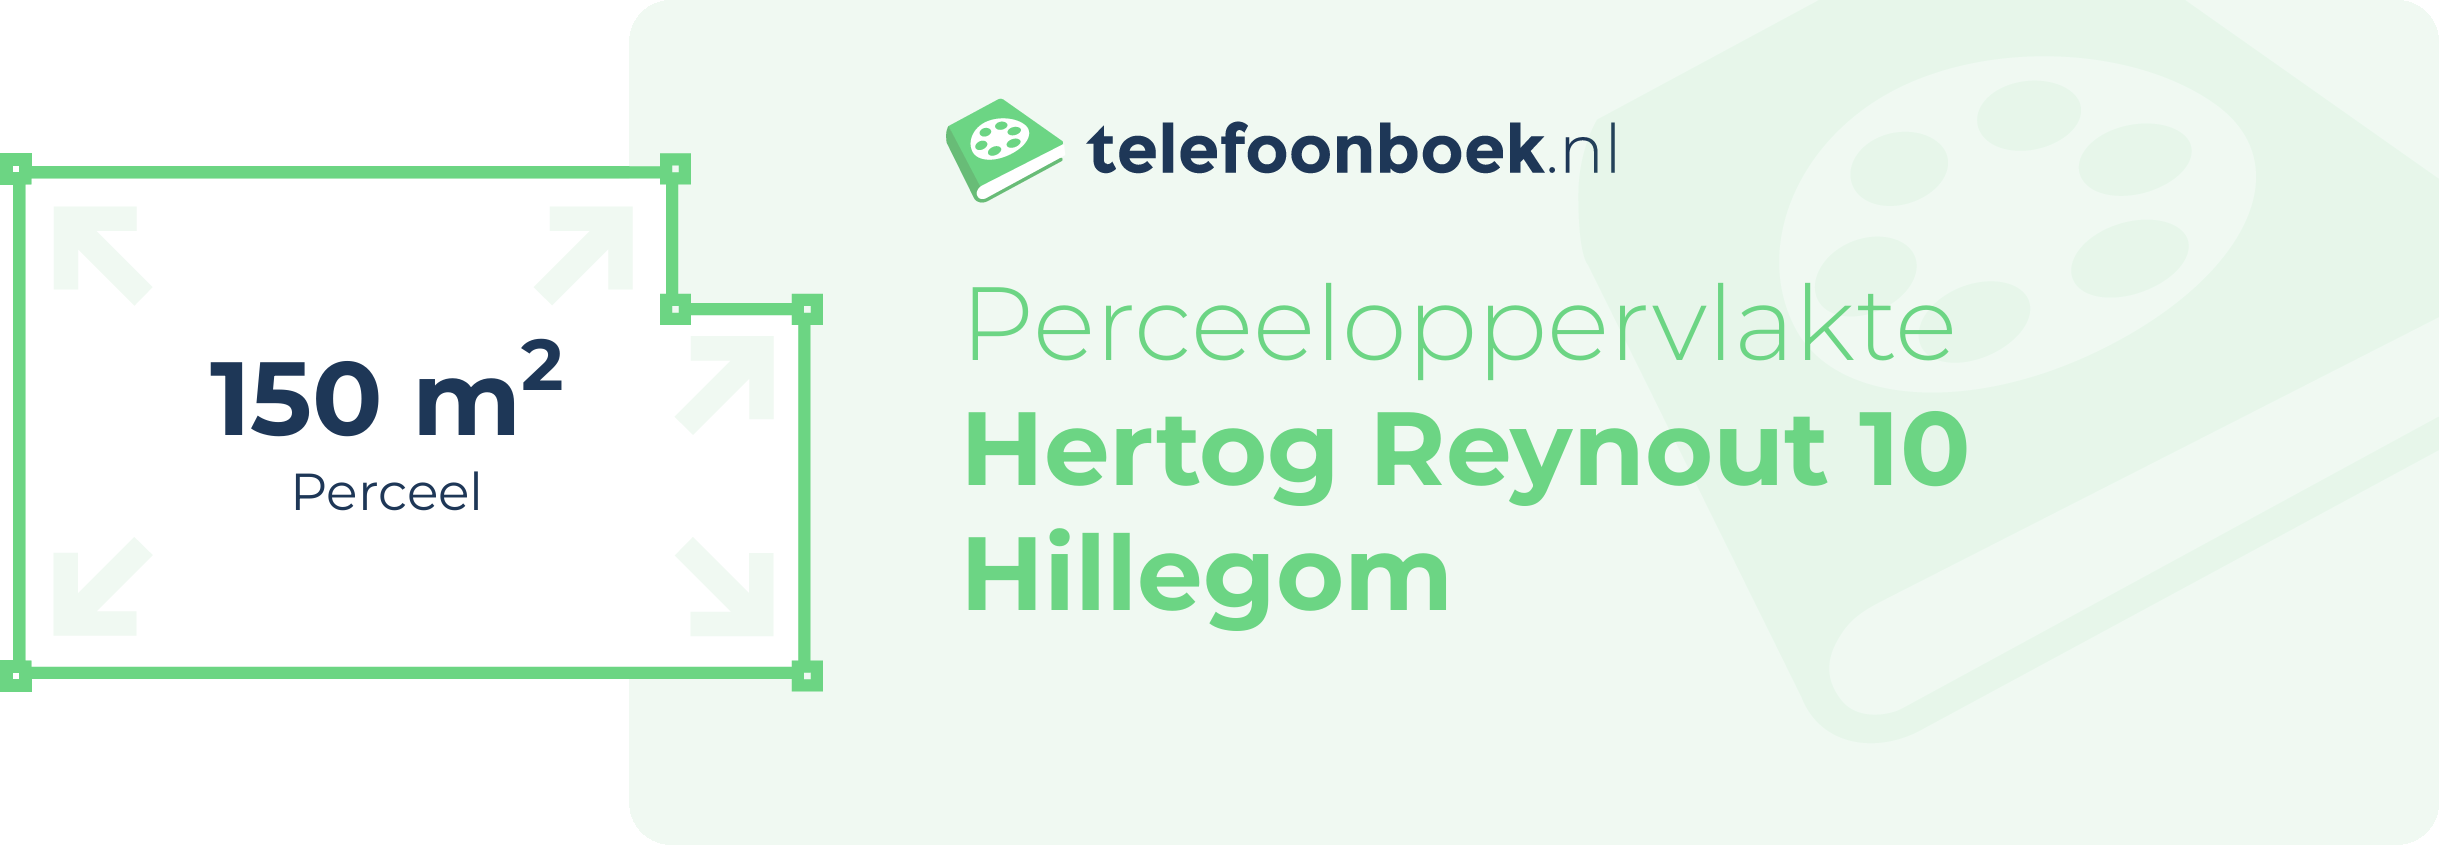 Perceeloppervlakte Hertog Reynout 10 Hillegom